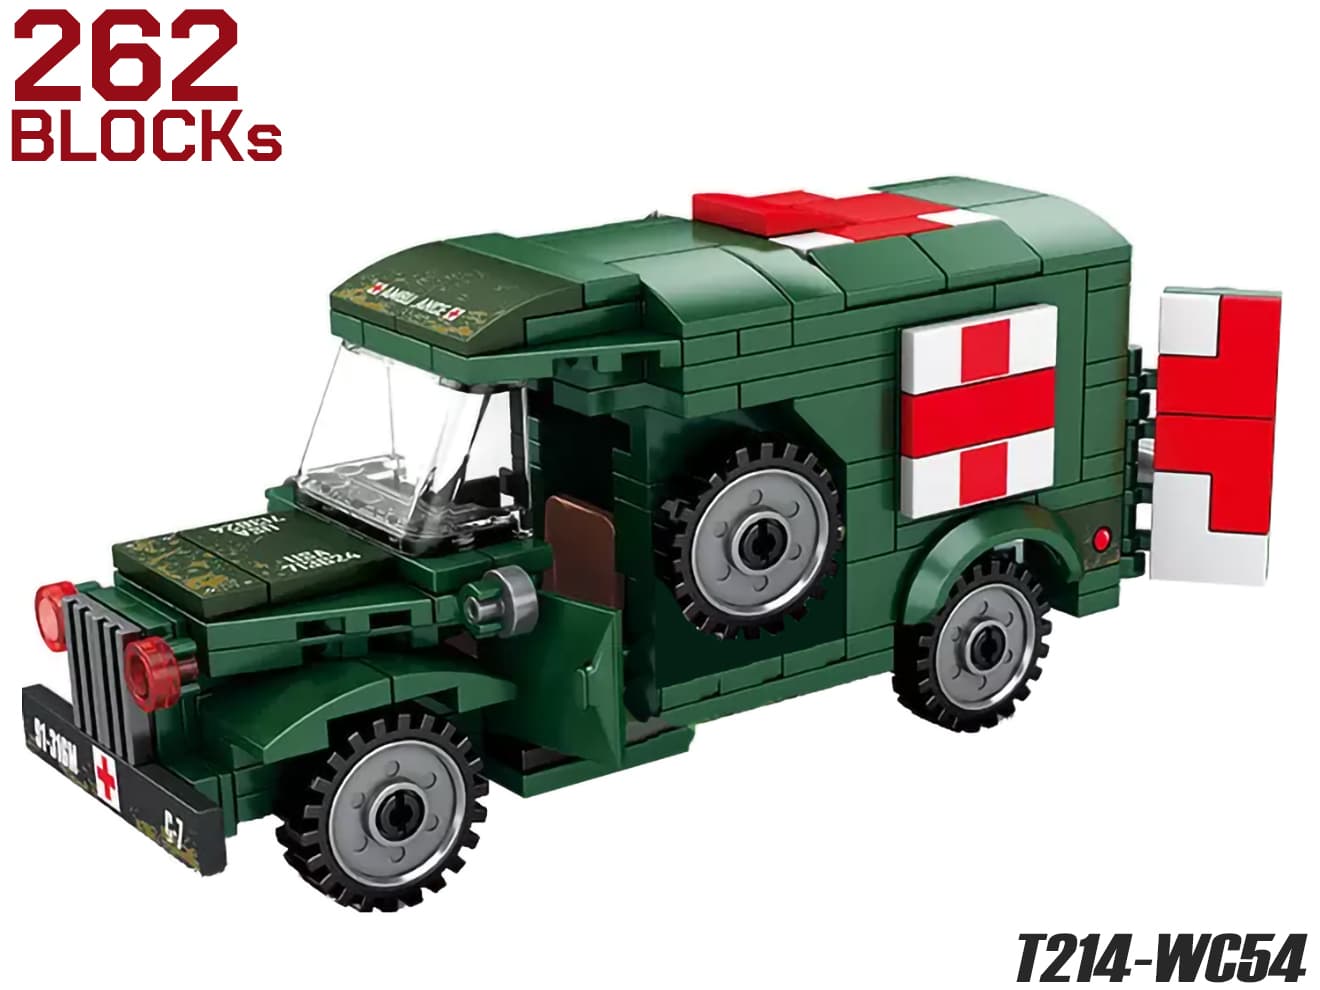 AFM T214-WC54 野戦救急車 262Blocks